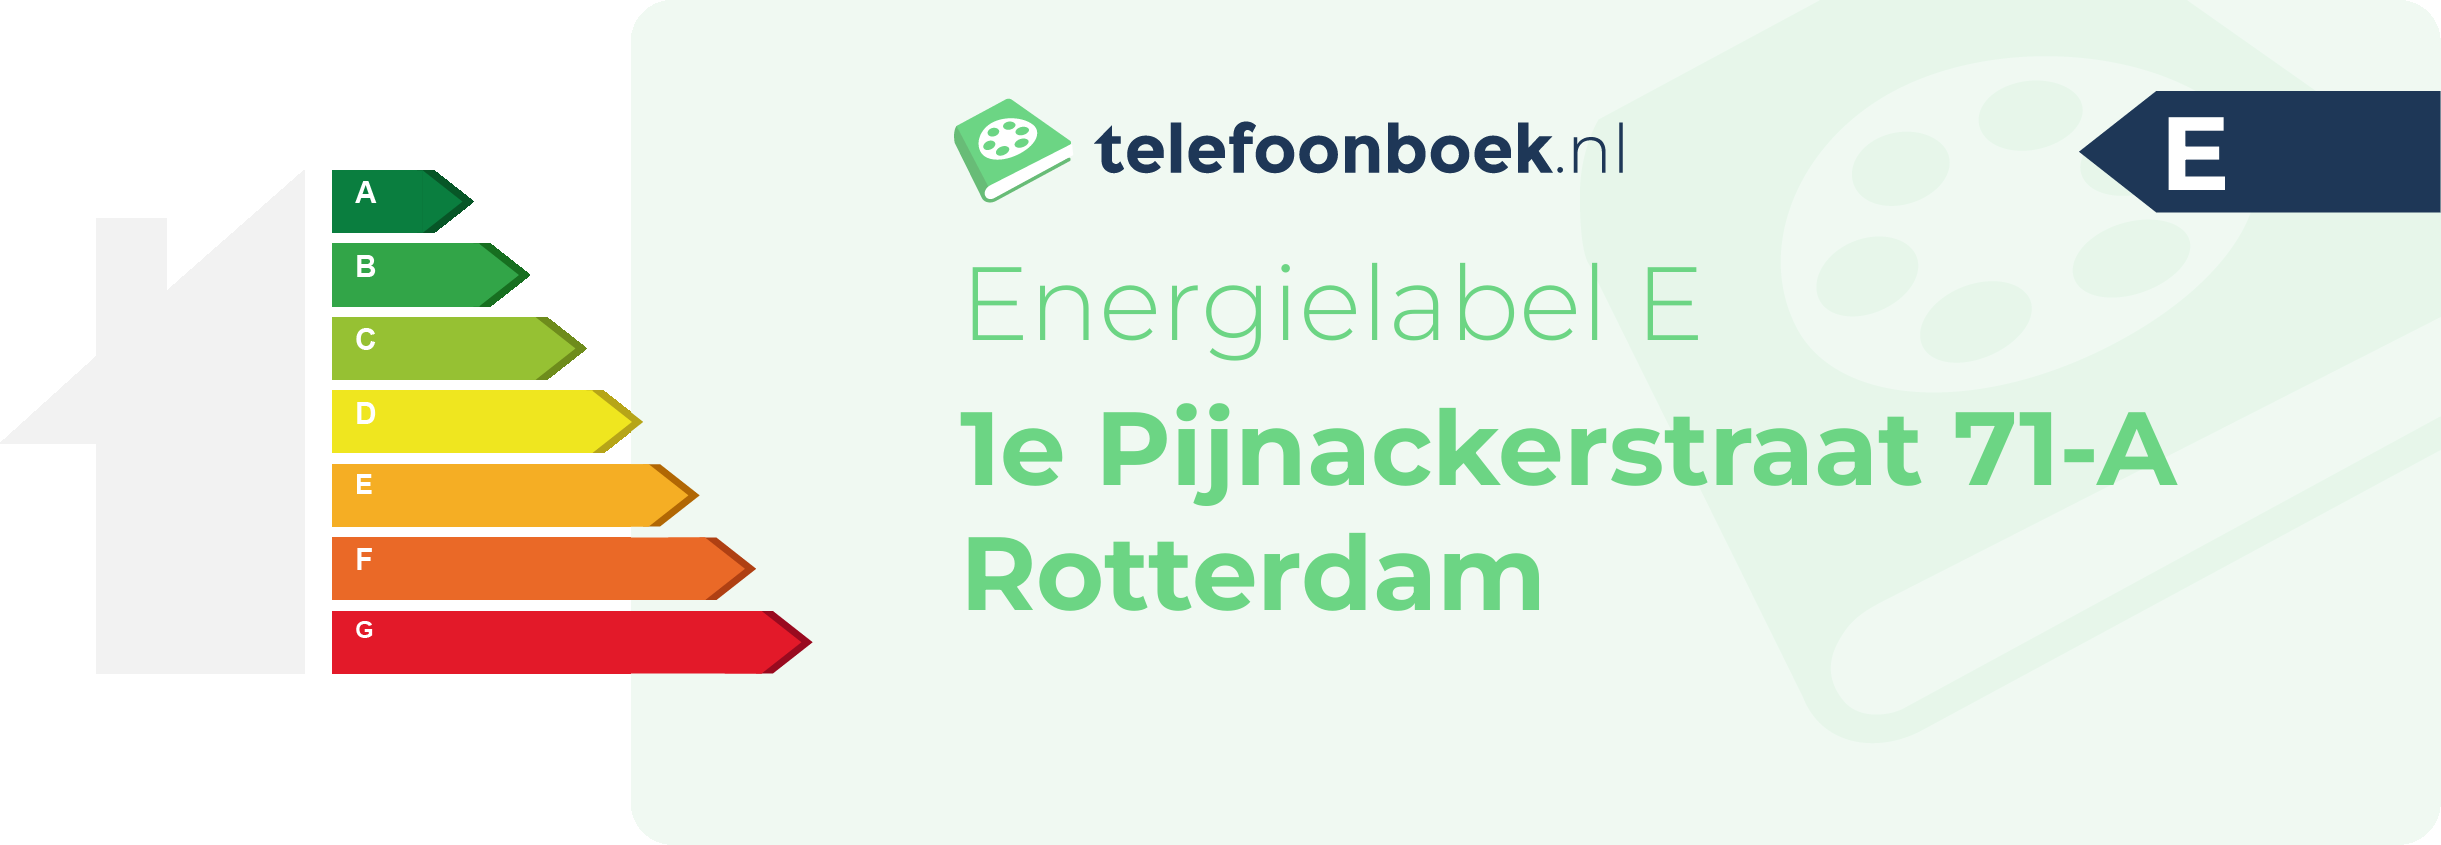 Energielabel 1e Pijnackerstraat 71-A Rotterdam